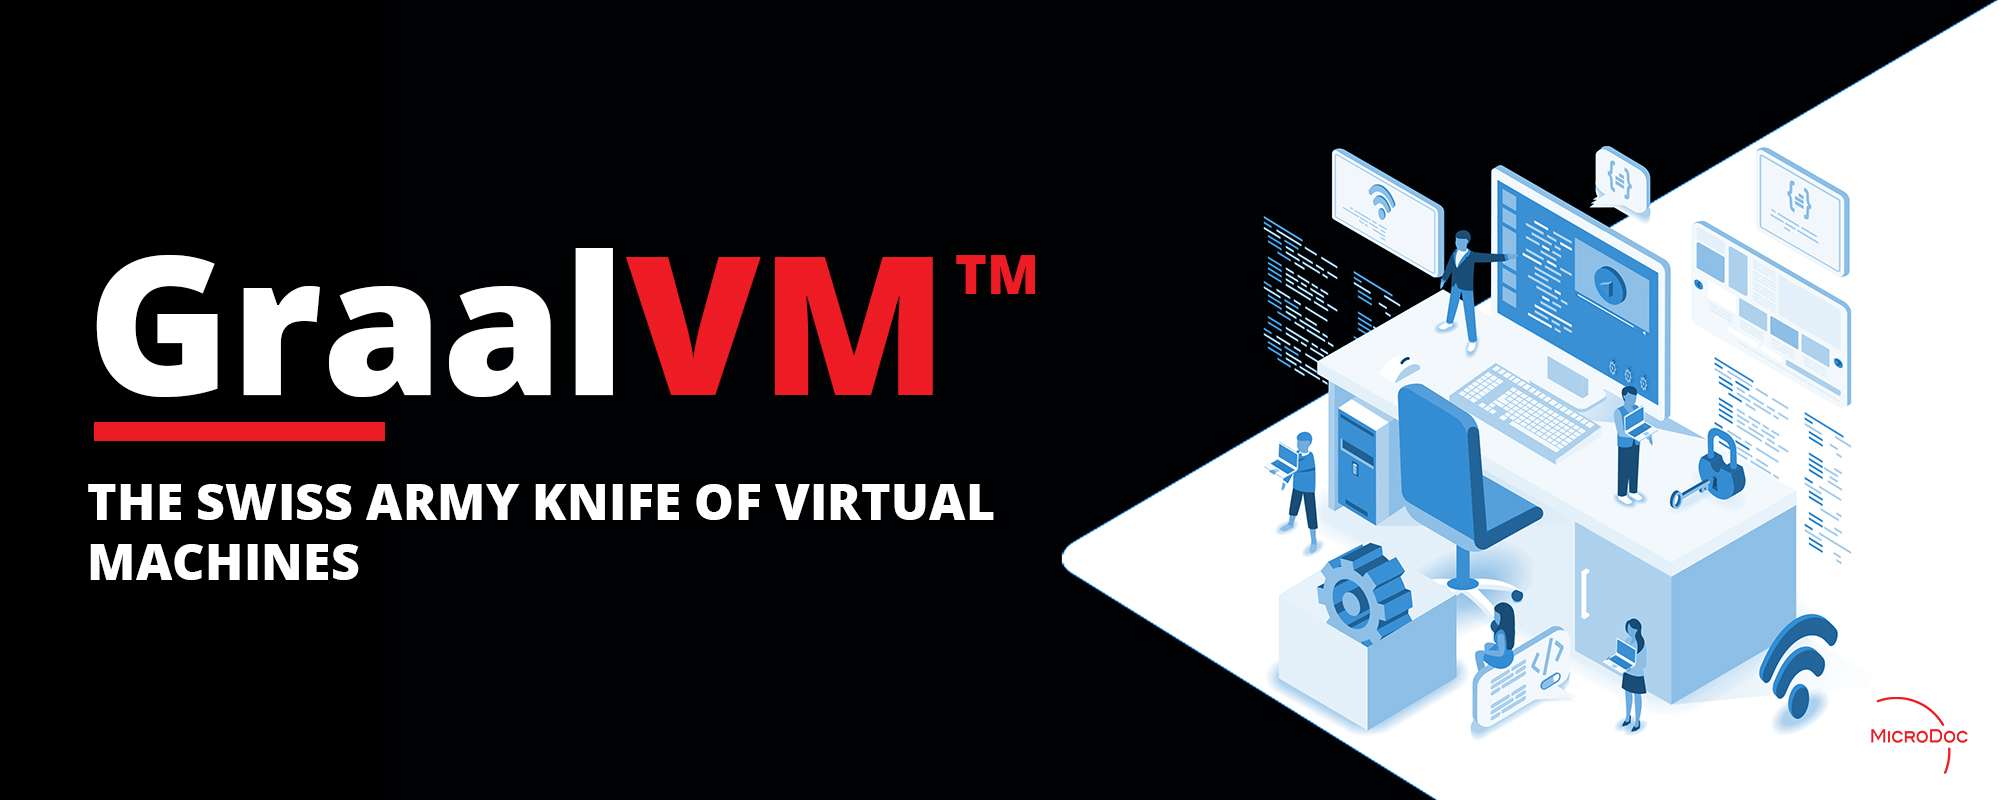 Graal VM™ – the Swiss Army knife of virtual machines